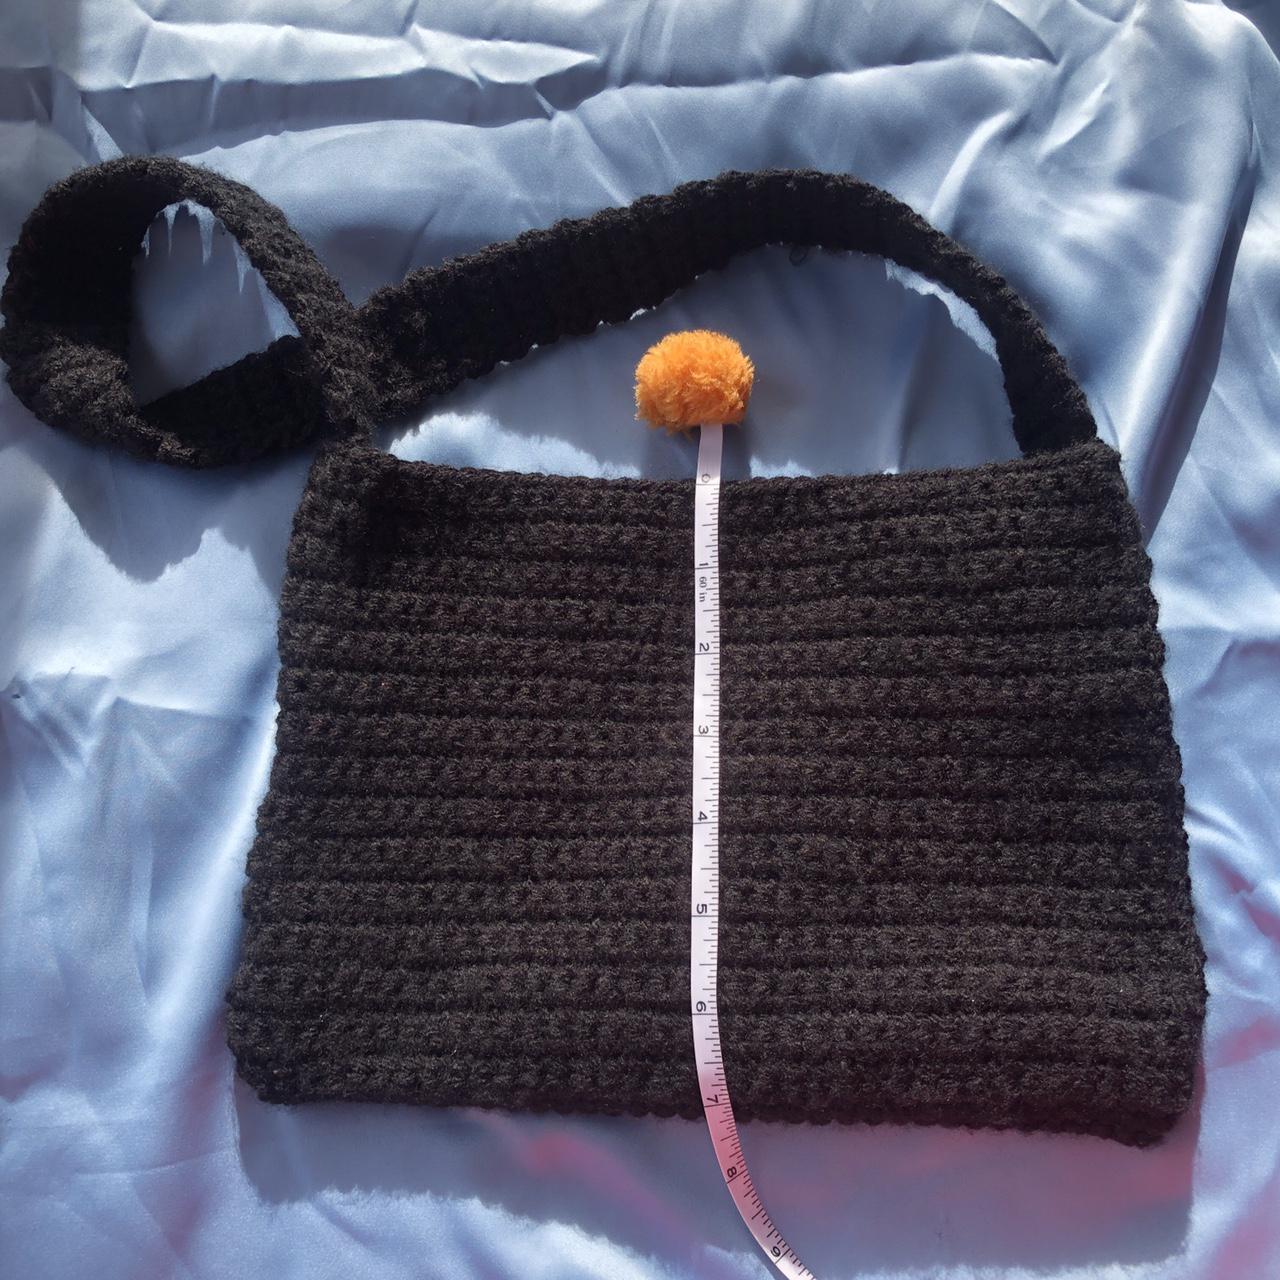 Product Image 4 - -skull crochet bag
-handmade by me
-All